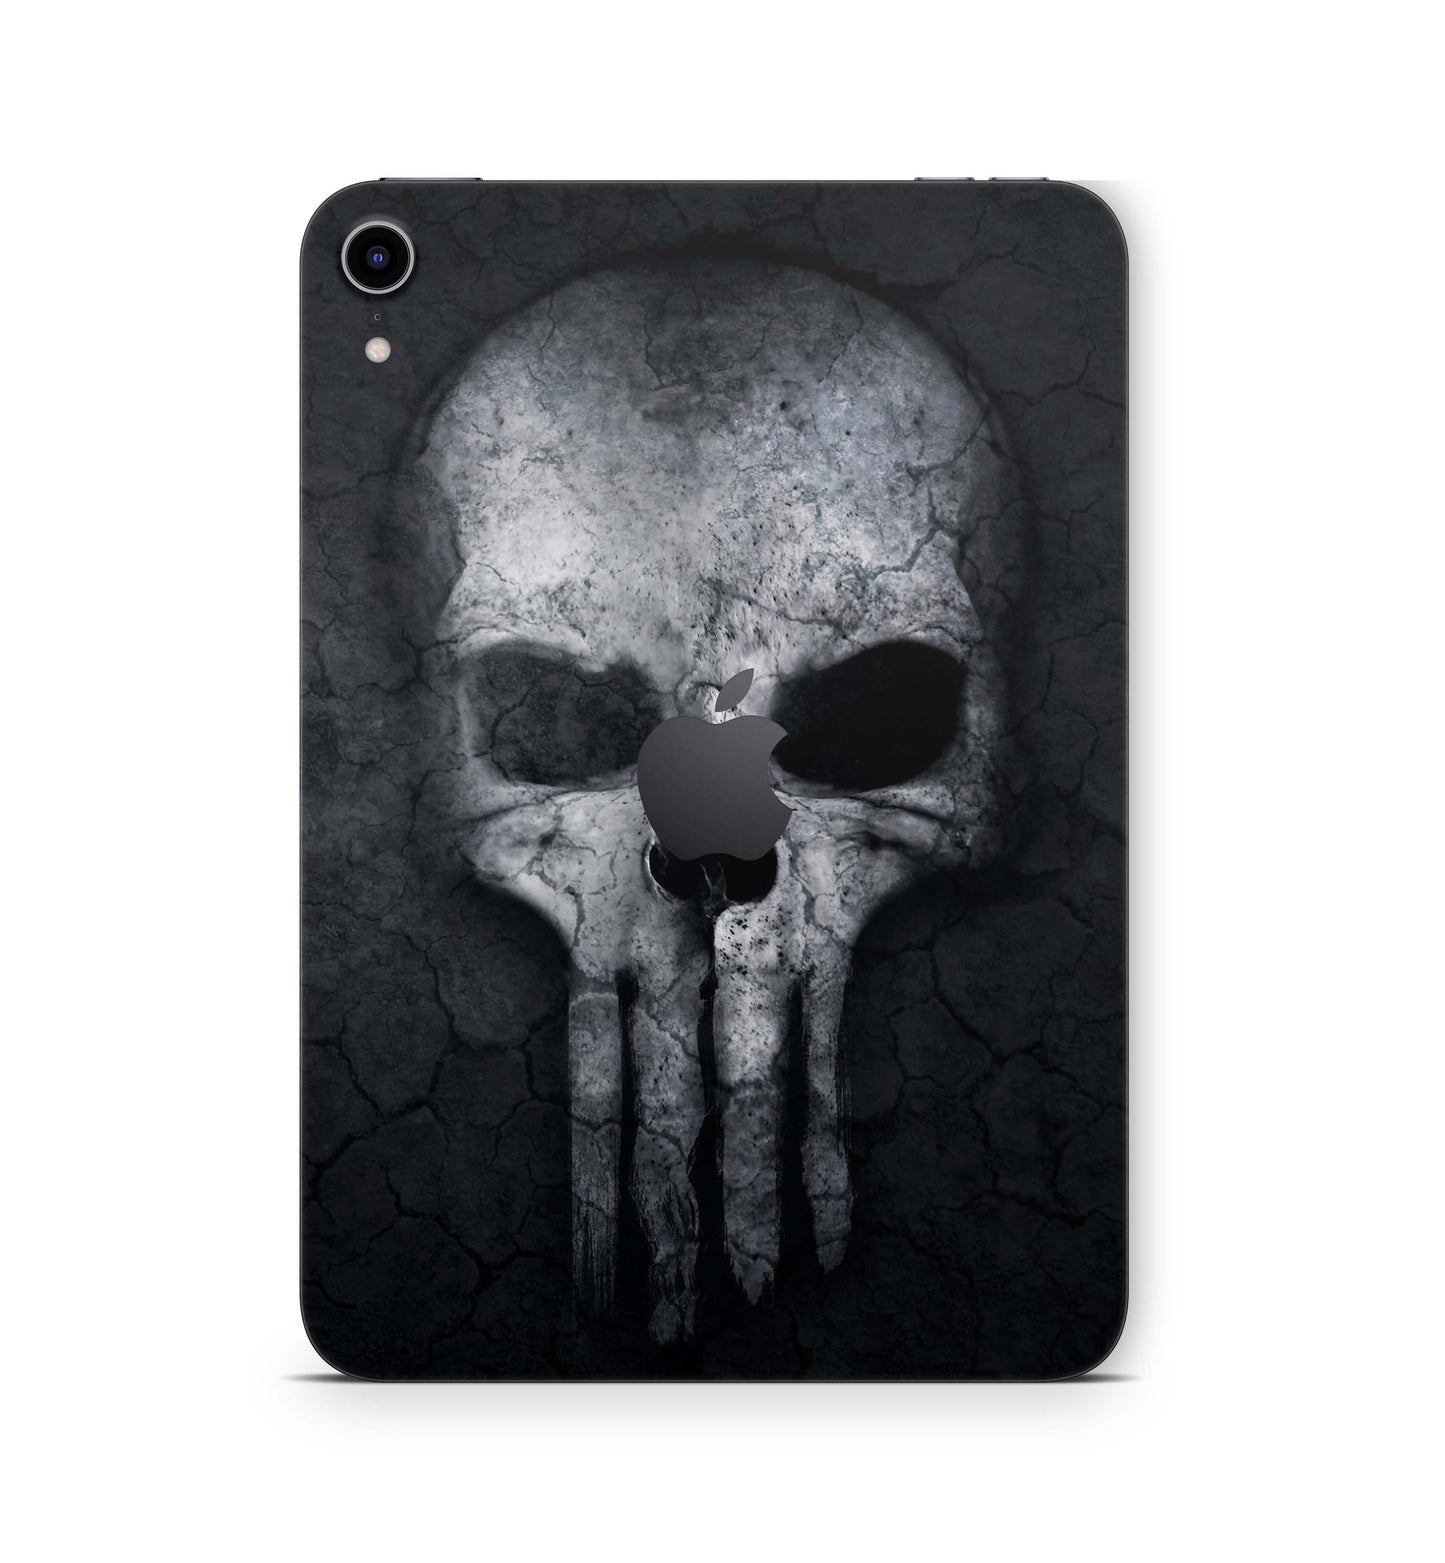 iPad Mini Skin Design Cover Folie Vinyl Skins & Wraps für alle iPad Mini Modelle Aufkleber Skins4u Hard-Skull  